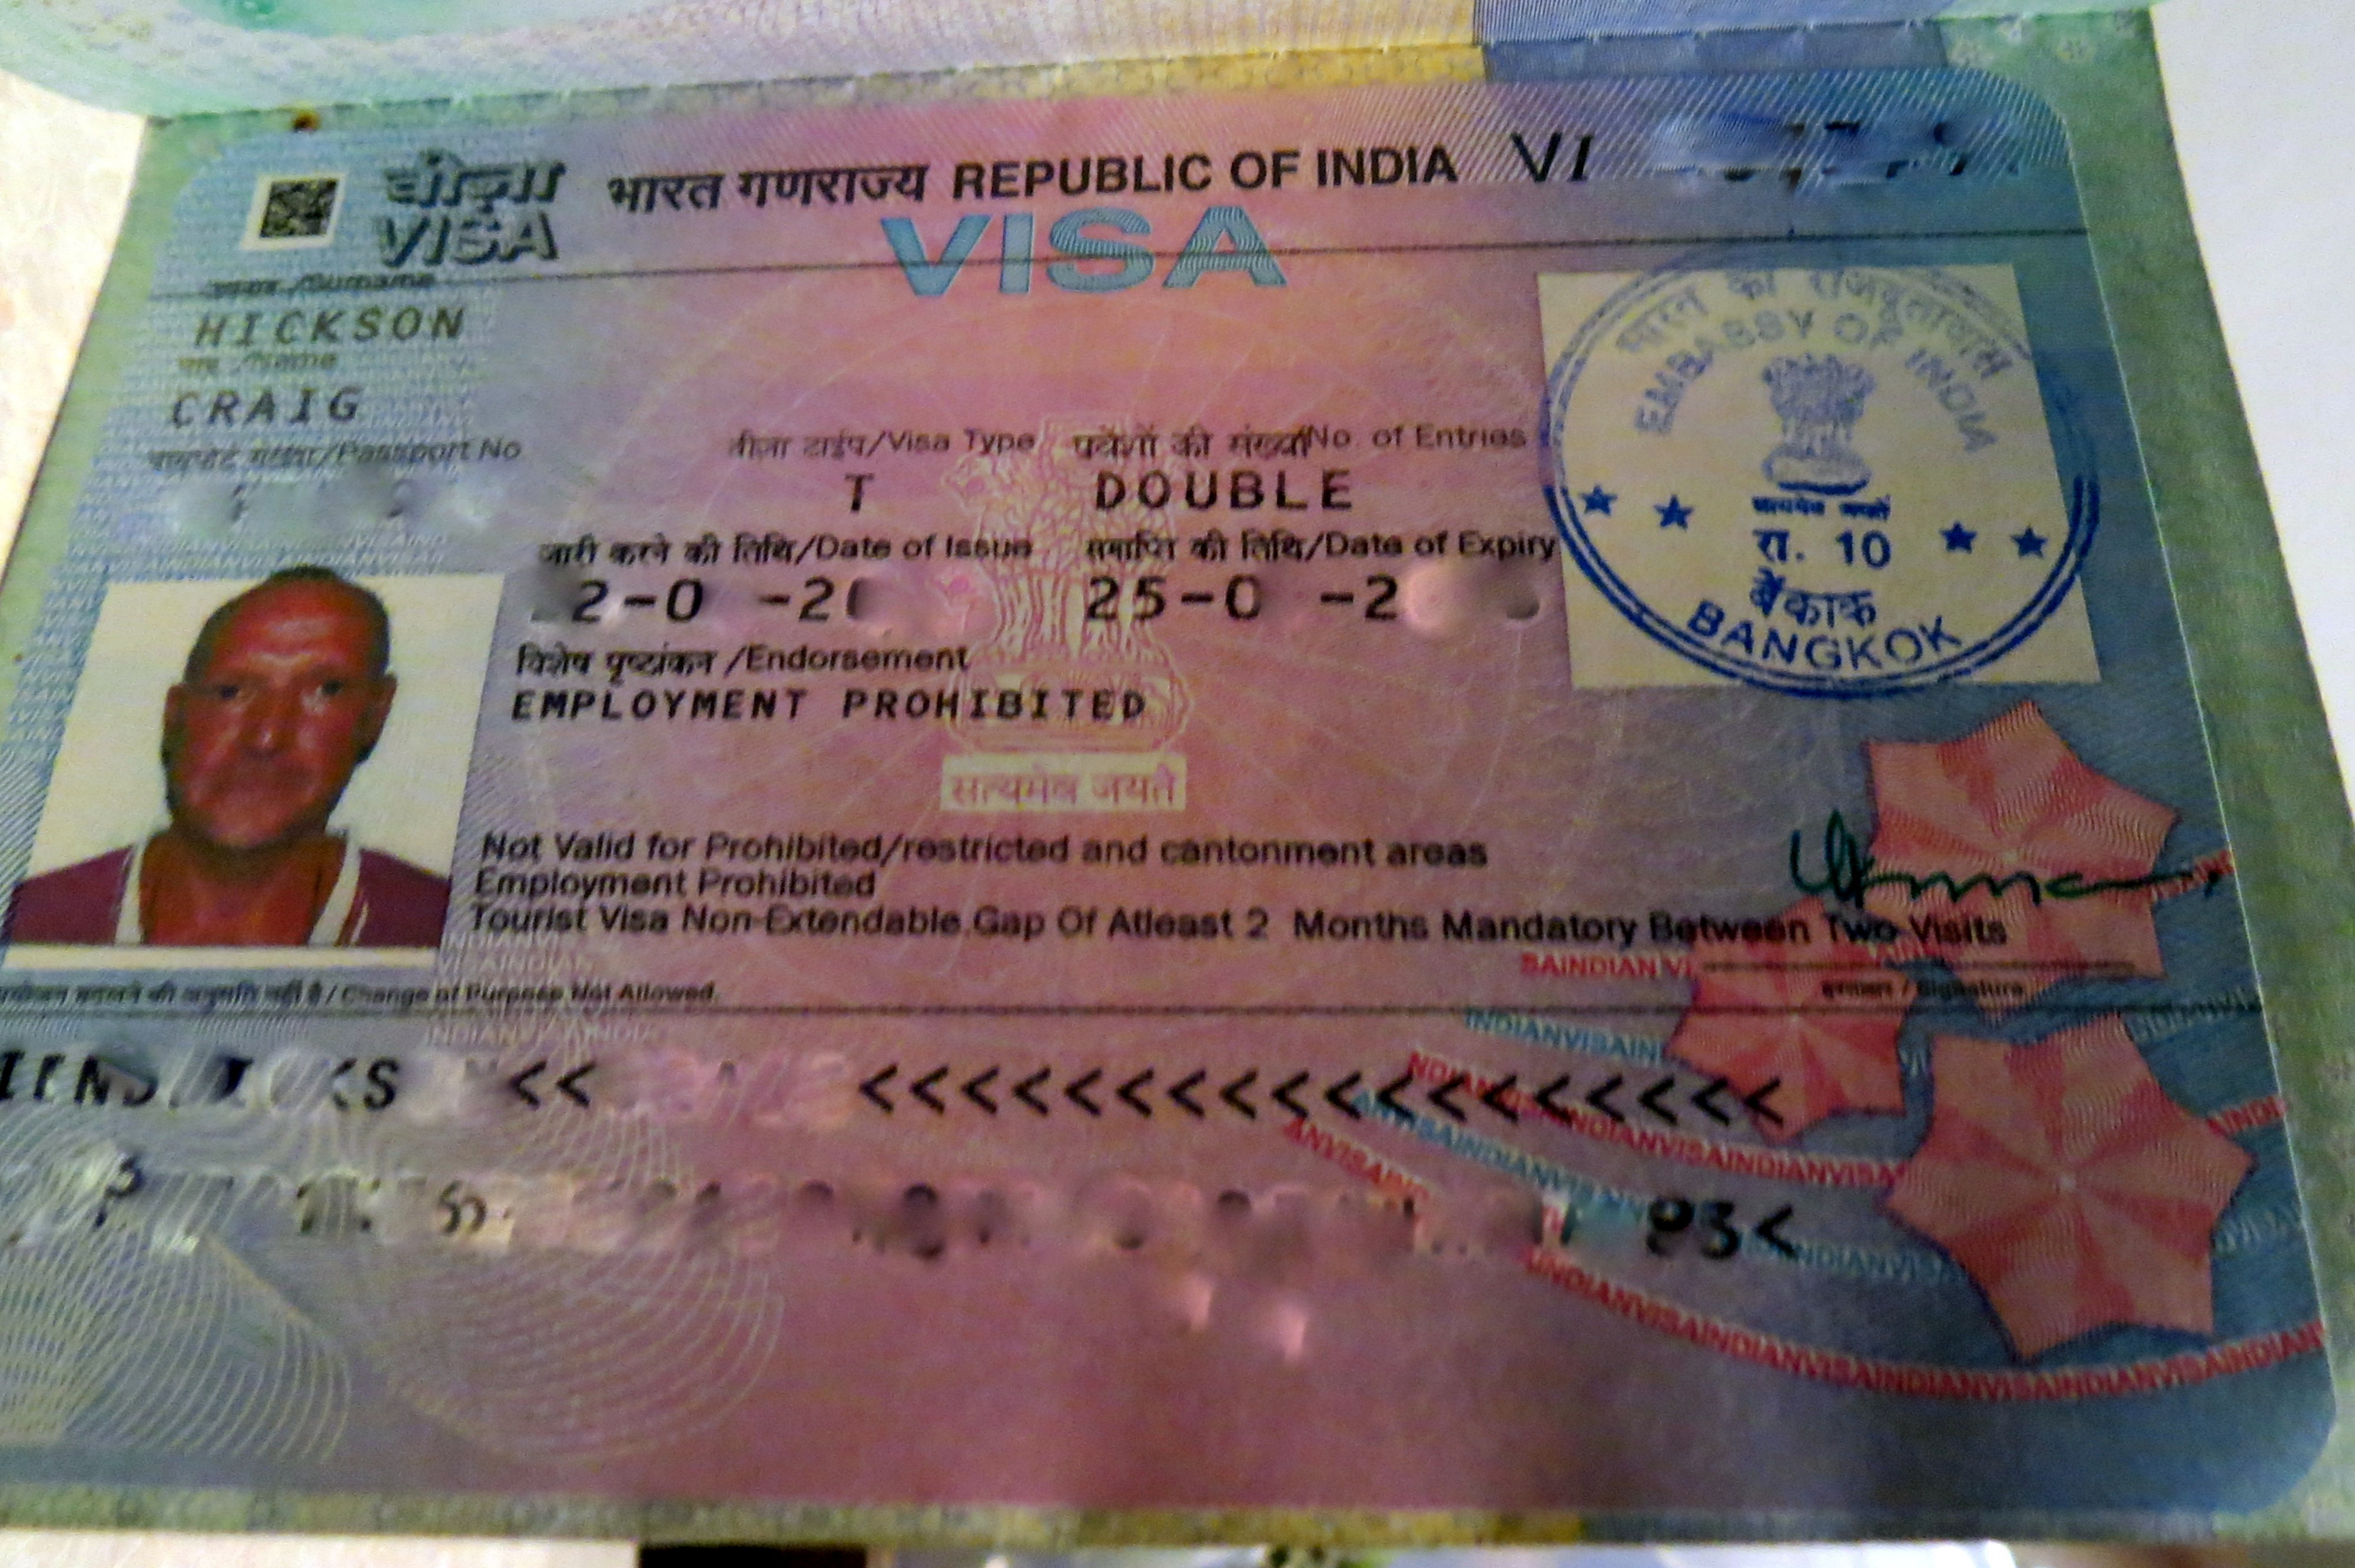 visa for india online